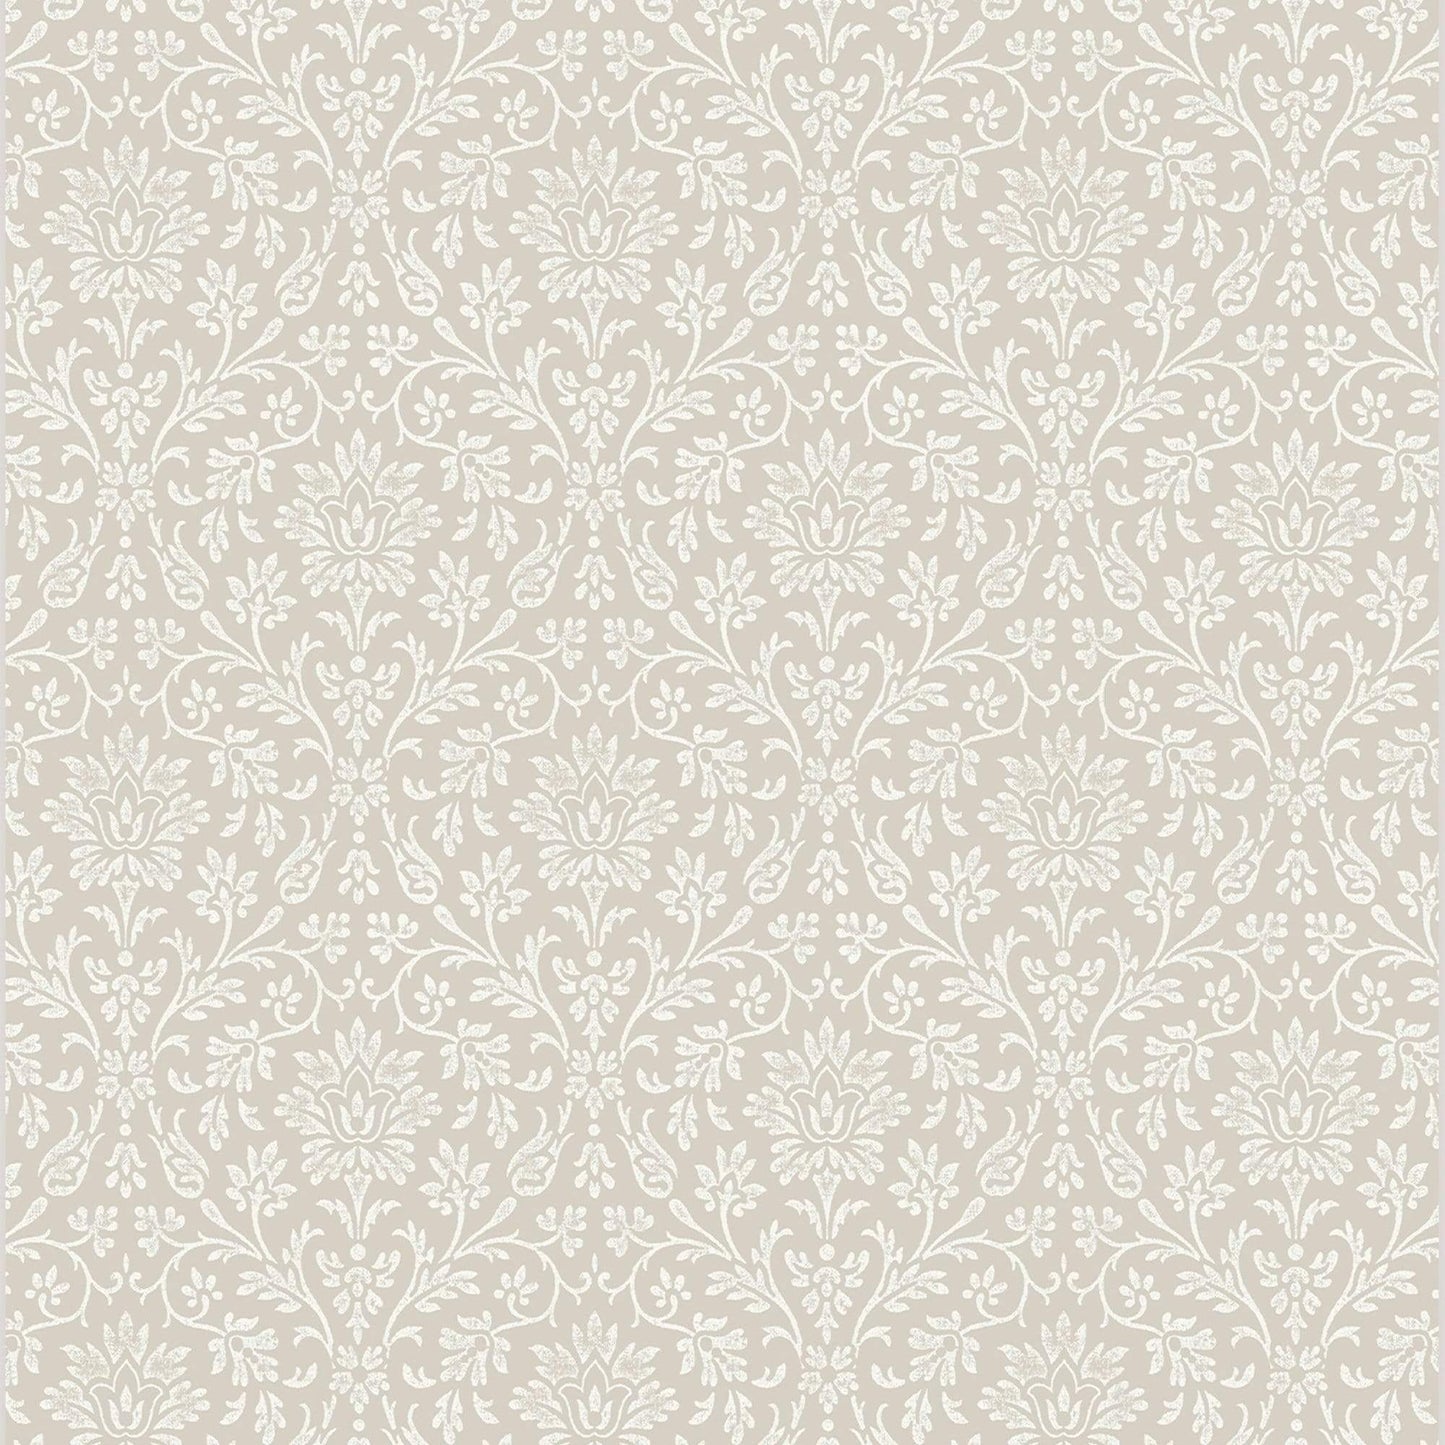 Wallpaper  -  Laura Ashley Annecy Dove Grey Wallpaper - 113369  -  60001900